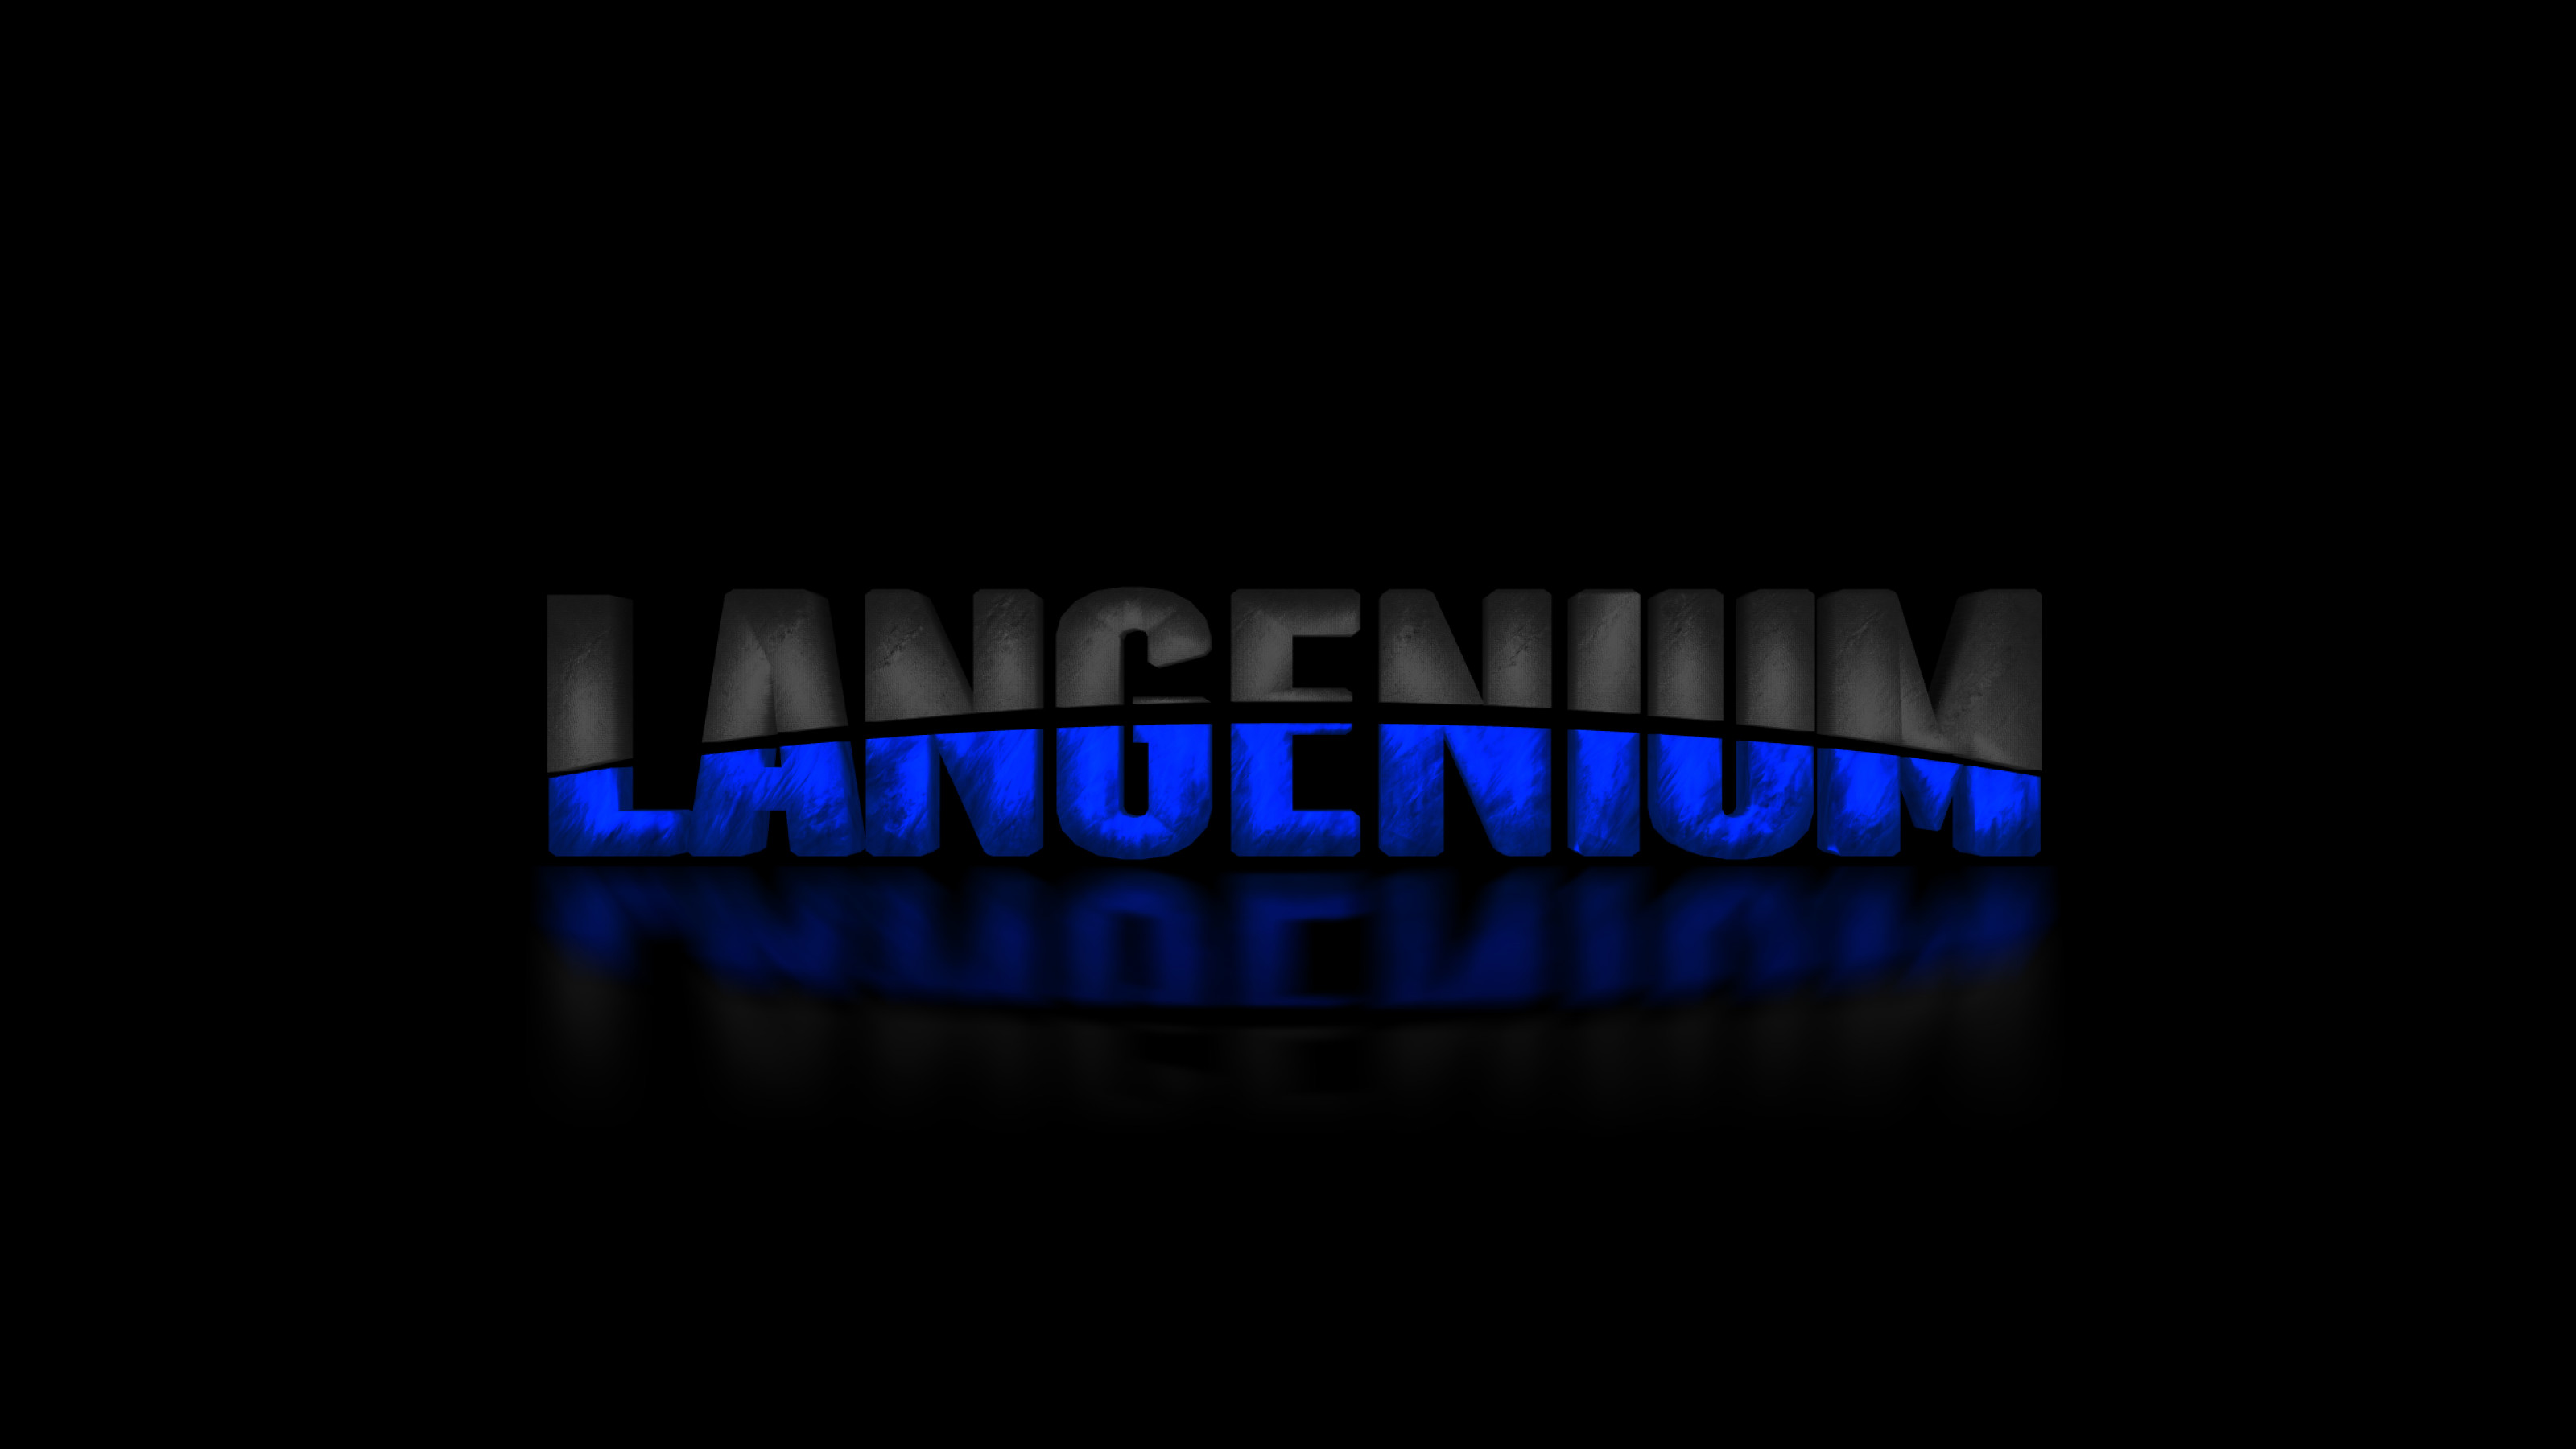 Langenium logo rendered using custom GLSL shaders and Three.JS.